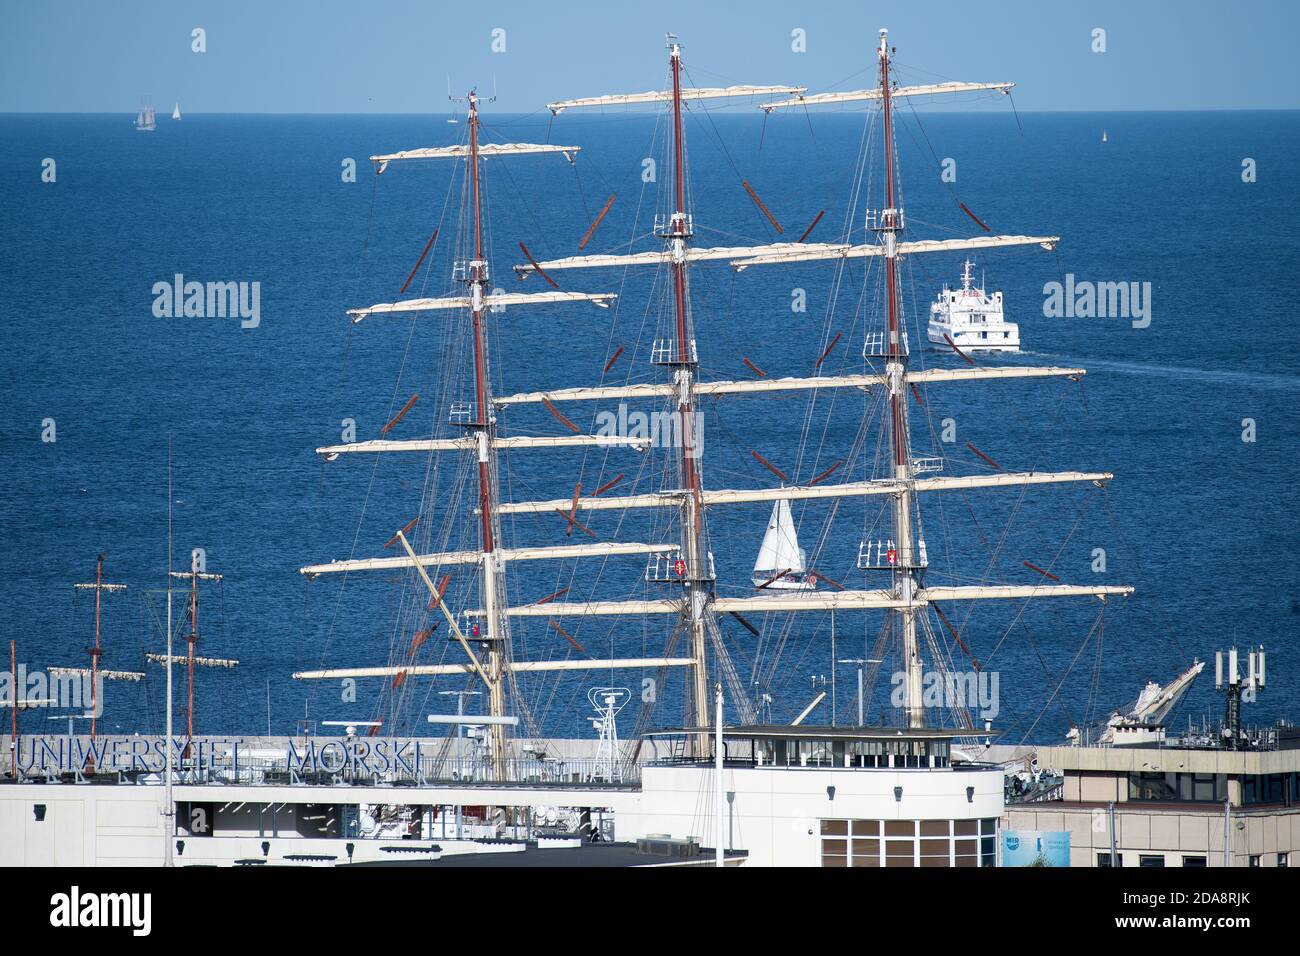 Dar Mlodziezy (Gift of the Youth), Polish full-rigged sailing ship of Gdynia Maritime University. Gdynia, Poland. September 13th 2020 © Wojciech Stroz Stock Photo